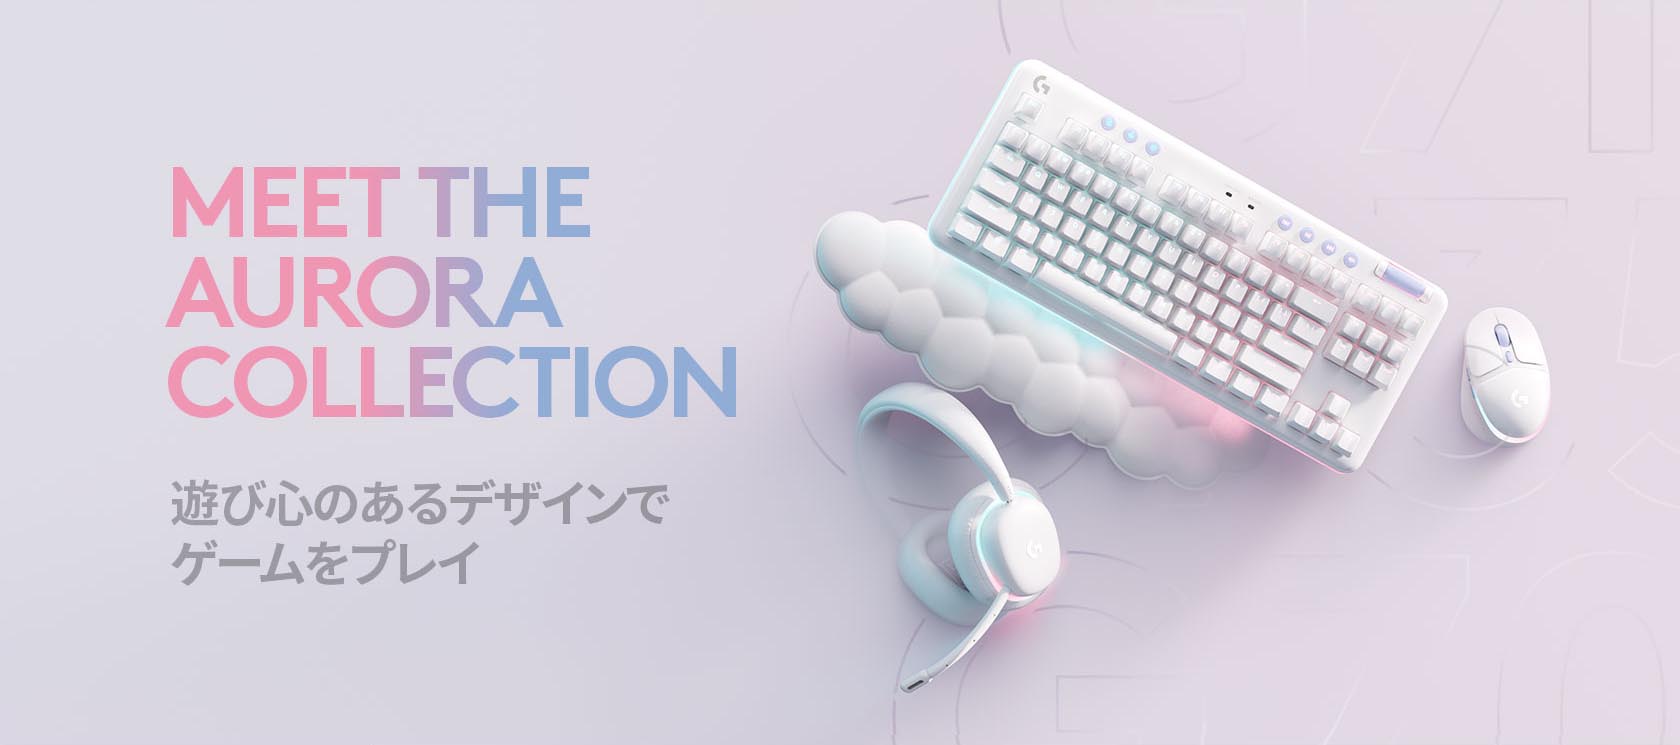 MEET THE AURORA COLLECTION 完璧なセットアップでゲームをプレイ